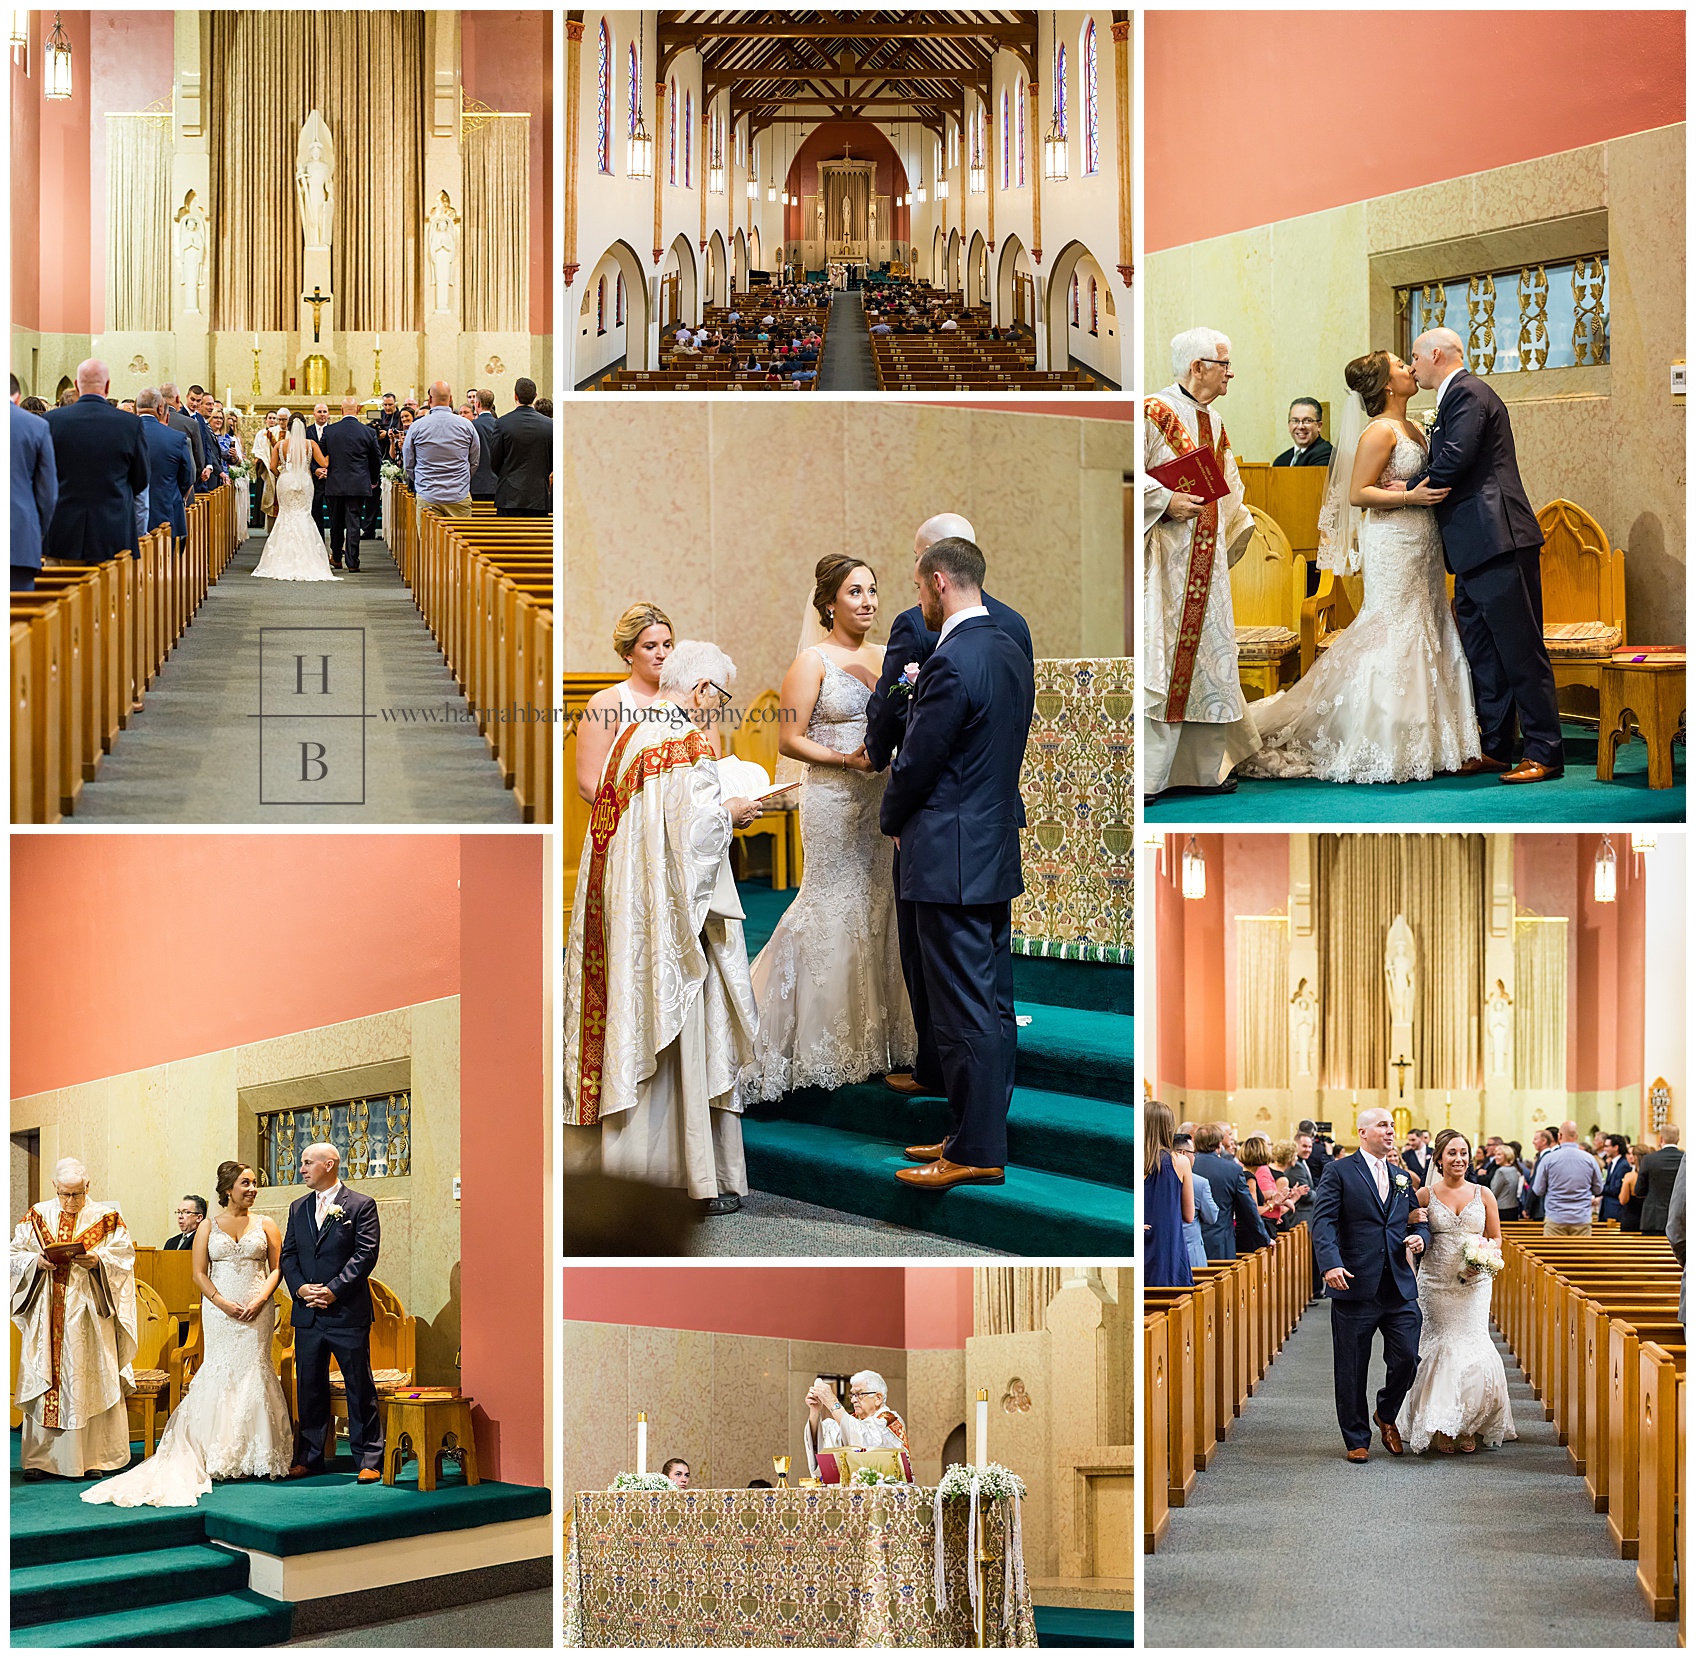 St. Michael's Catholic Church Wedding Ceremony